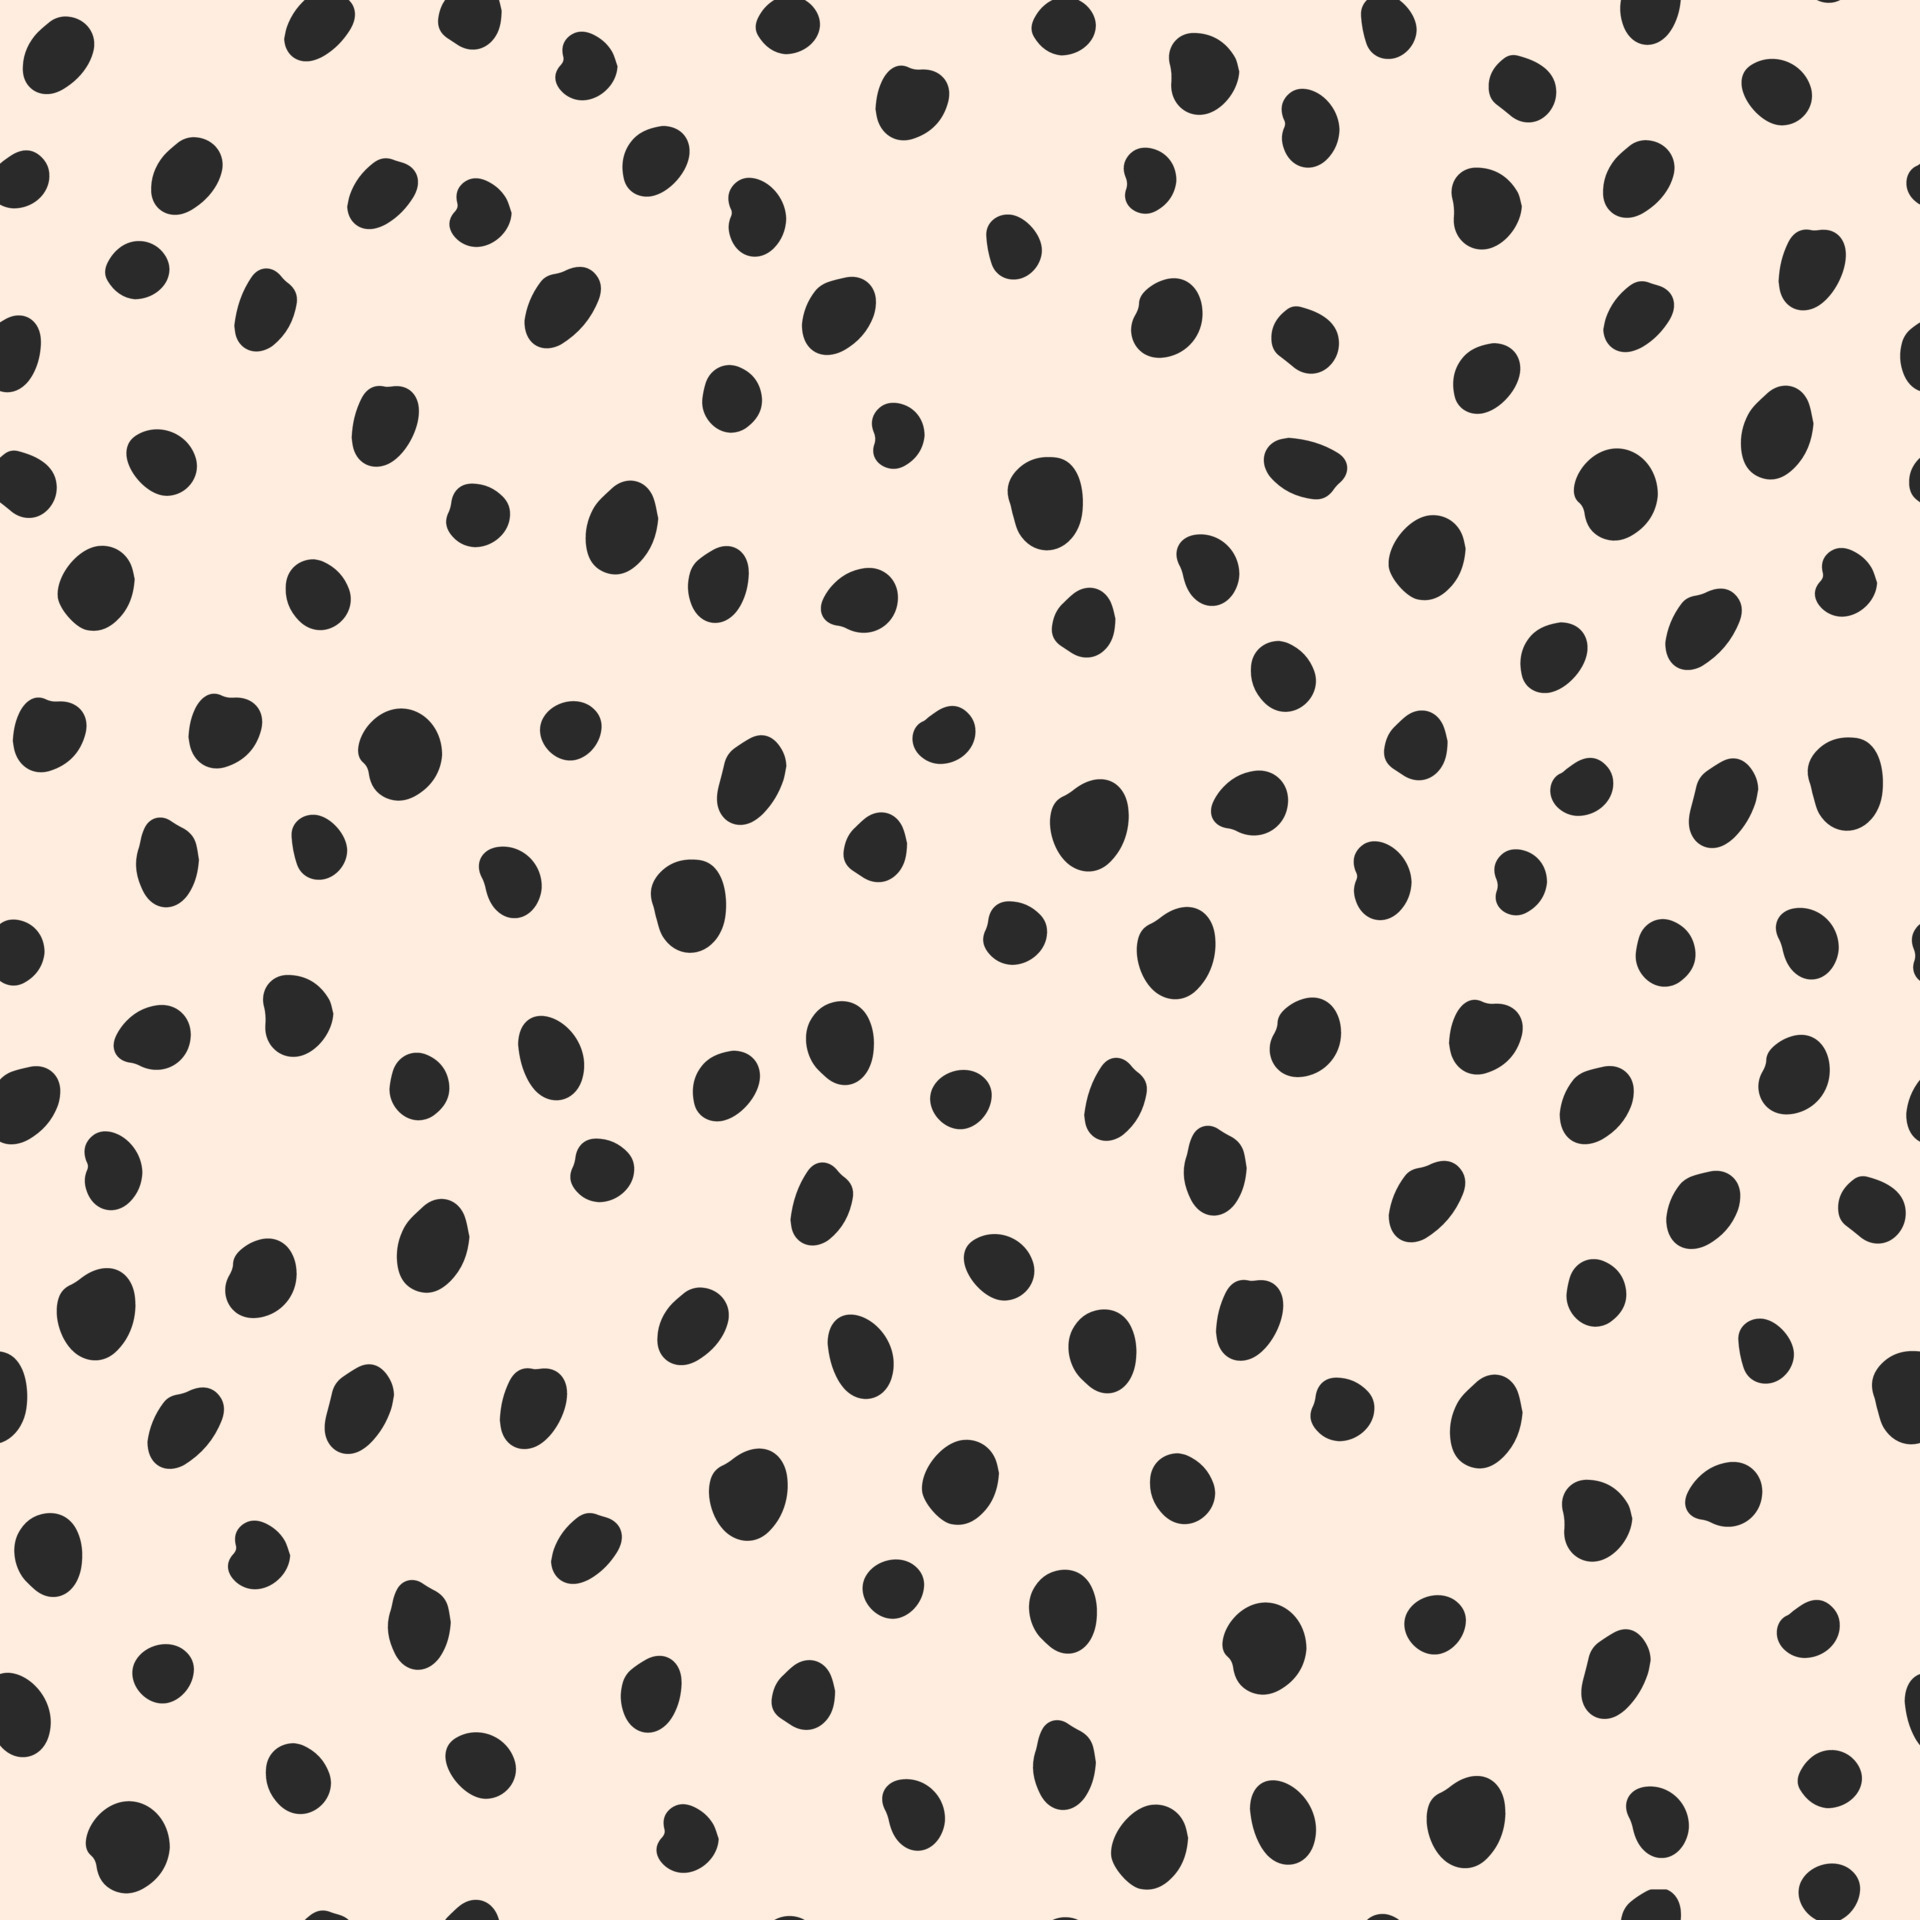 20 Colorful Polka Dot Wallpapers HD Iphone Android Desktop  Polka dots  wallpaper Dots wallpaper Polka dot art